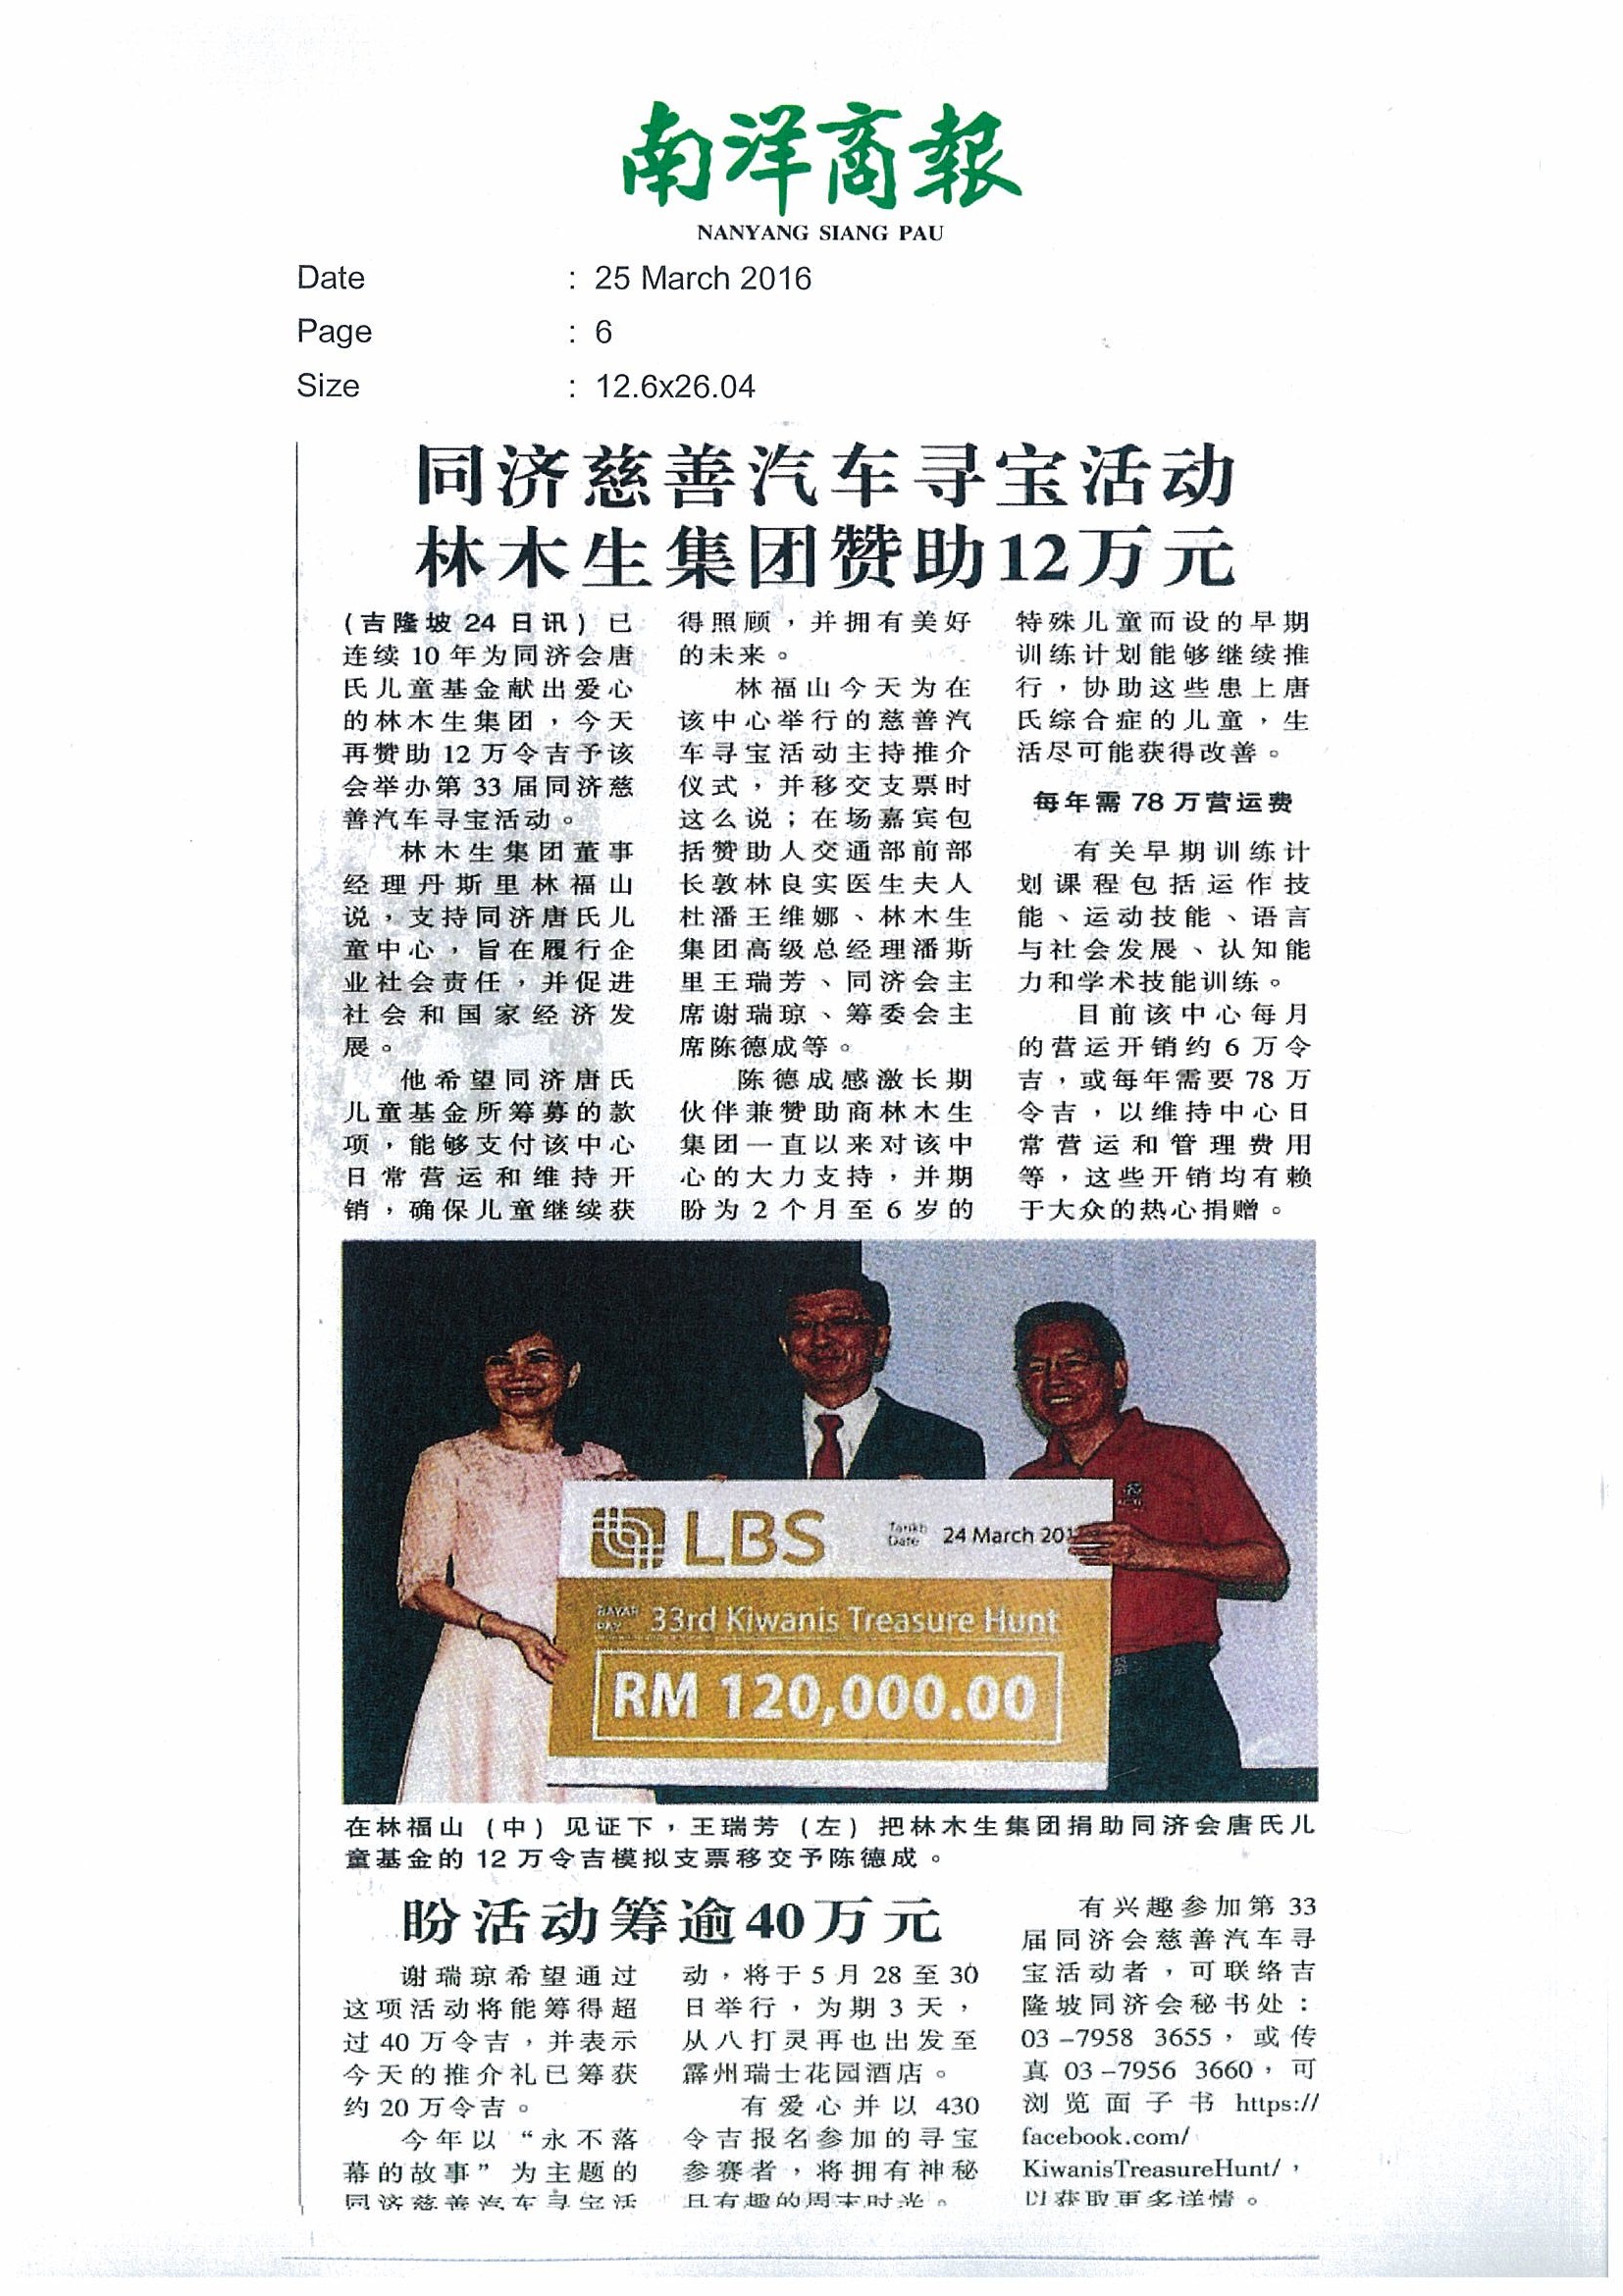 2016.03.25 Nanyang- LBS Bina Group sponsor RM120,000 for the Kiwanis treasure hunt event